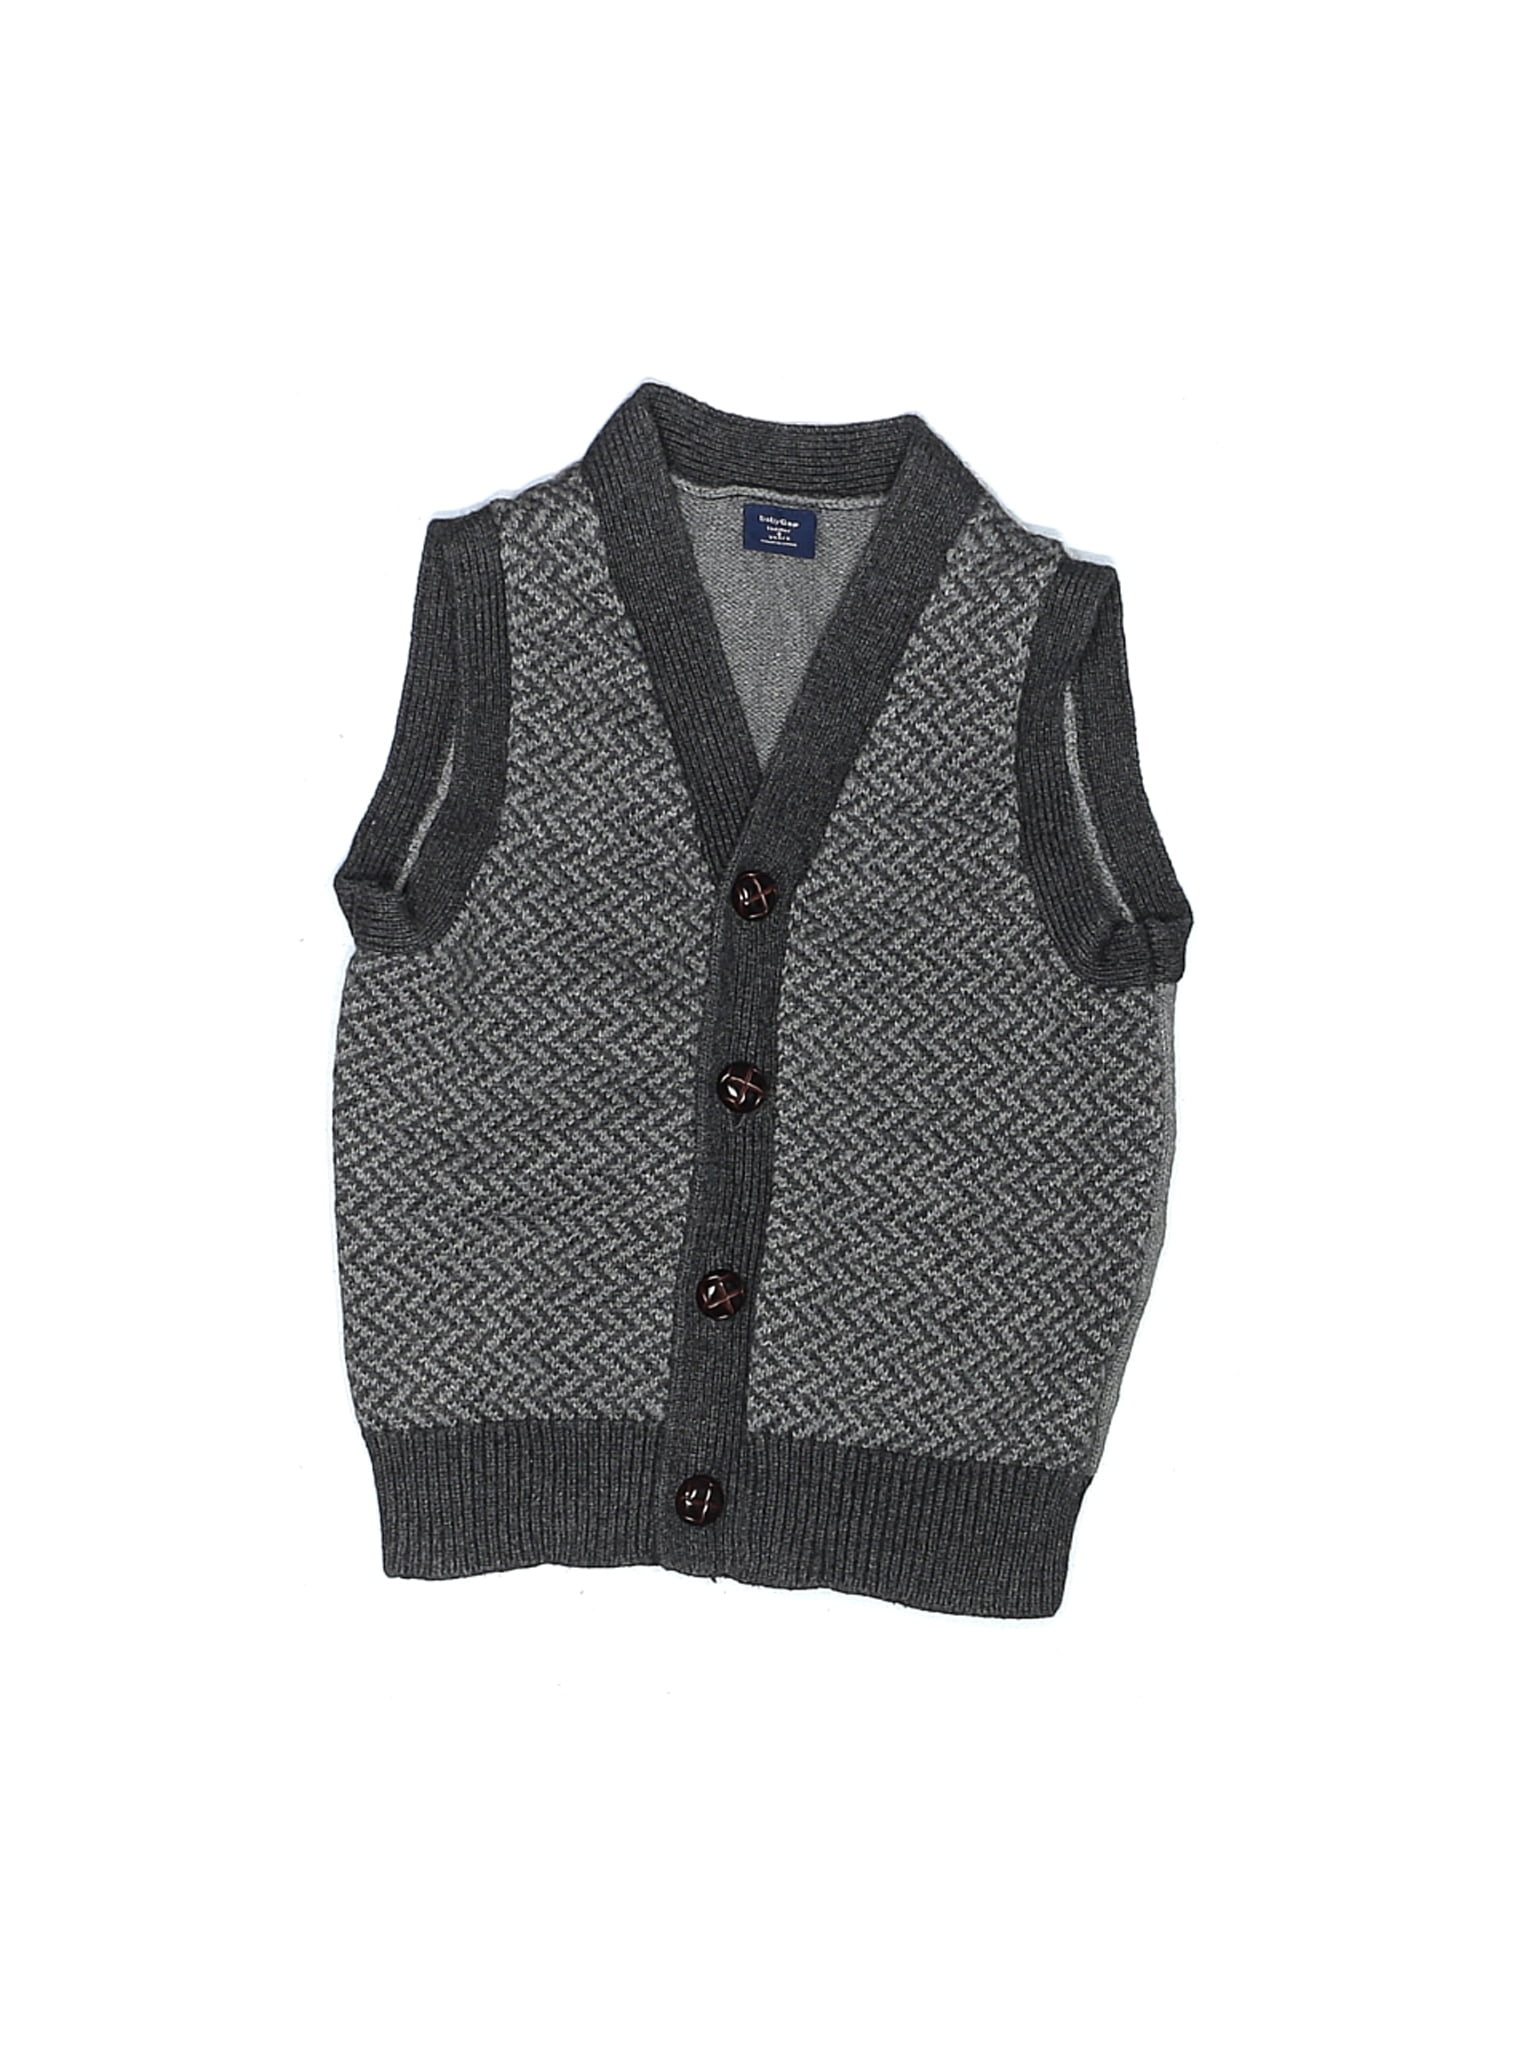 Gioberti Boy's 100% Cotton Diamond Knitted Vest 